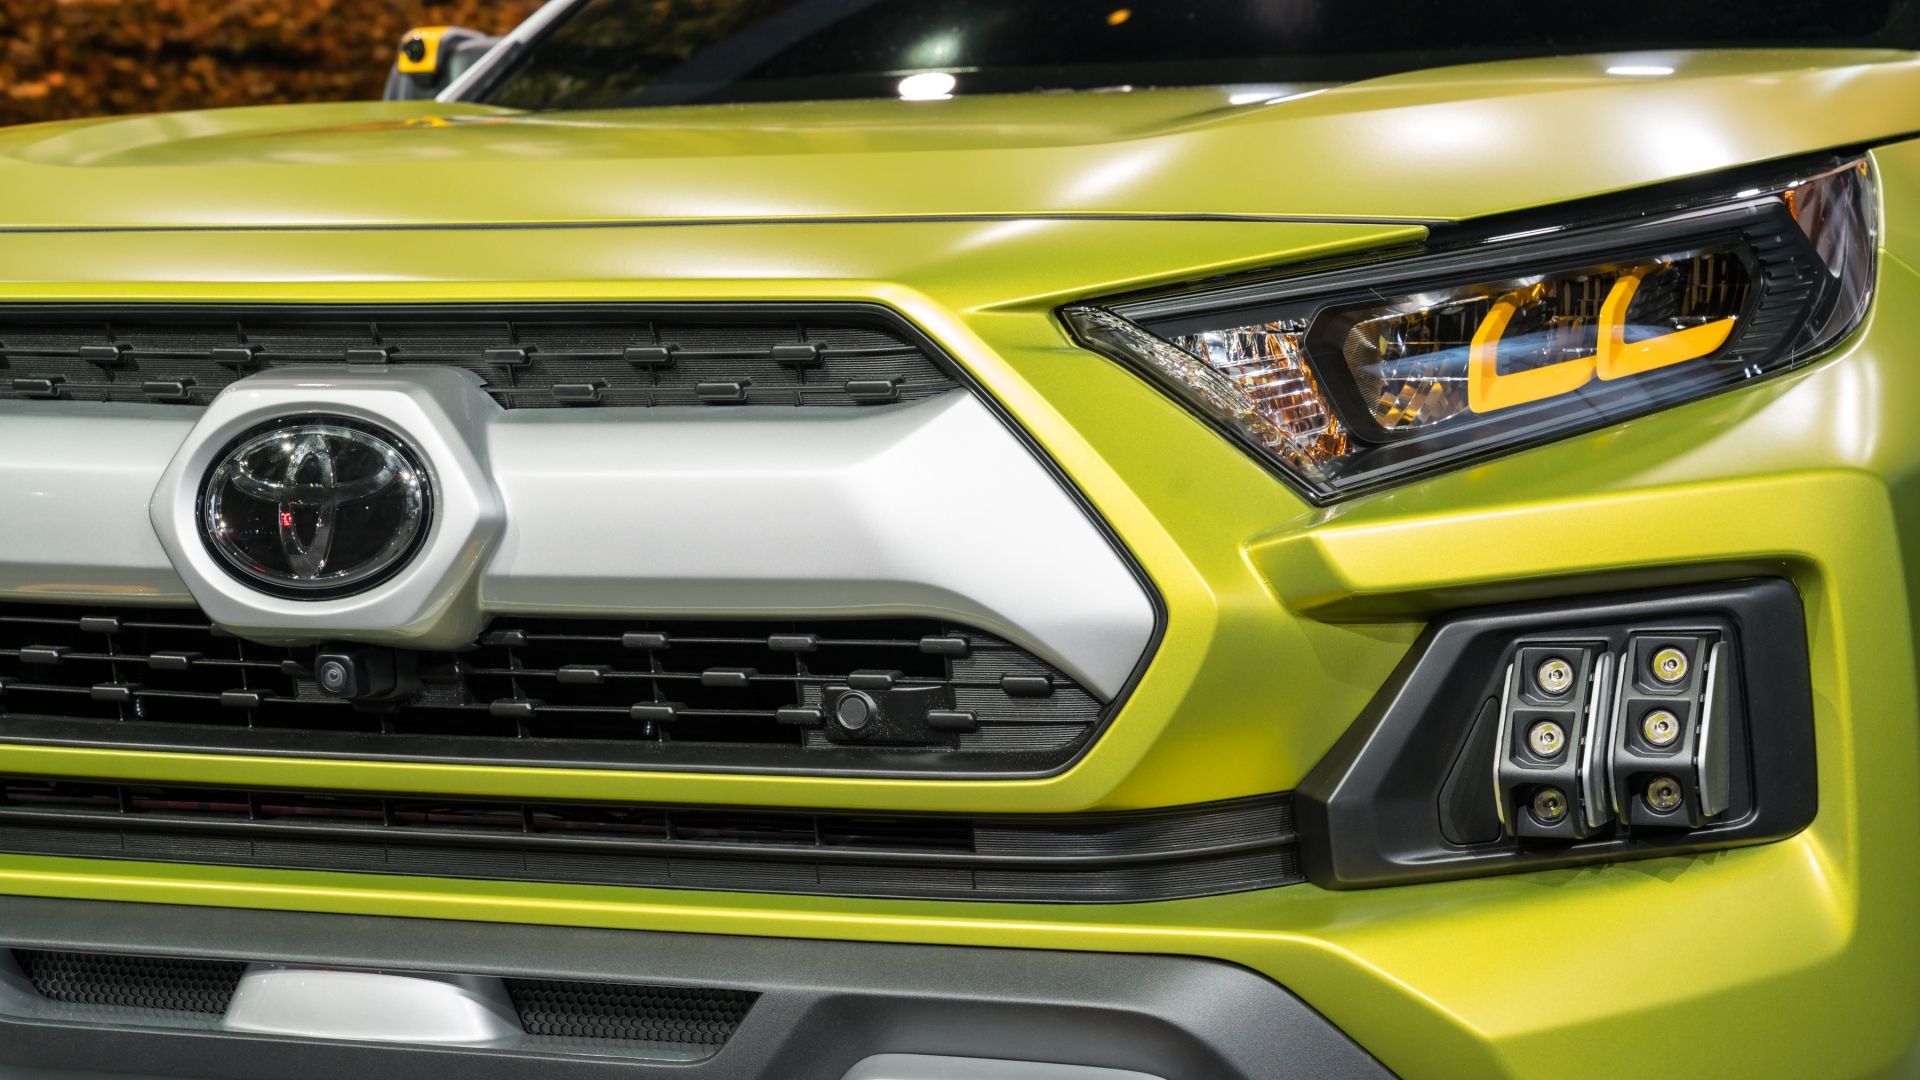 Toyota RAV4 Hybrid SUV: Models, Generations and Details